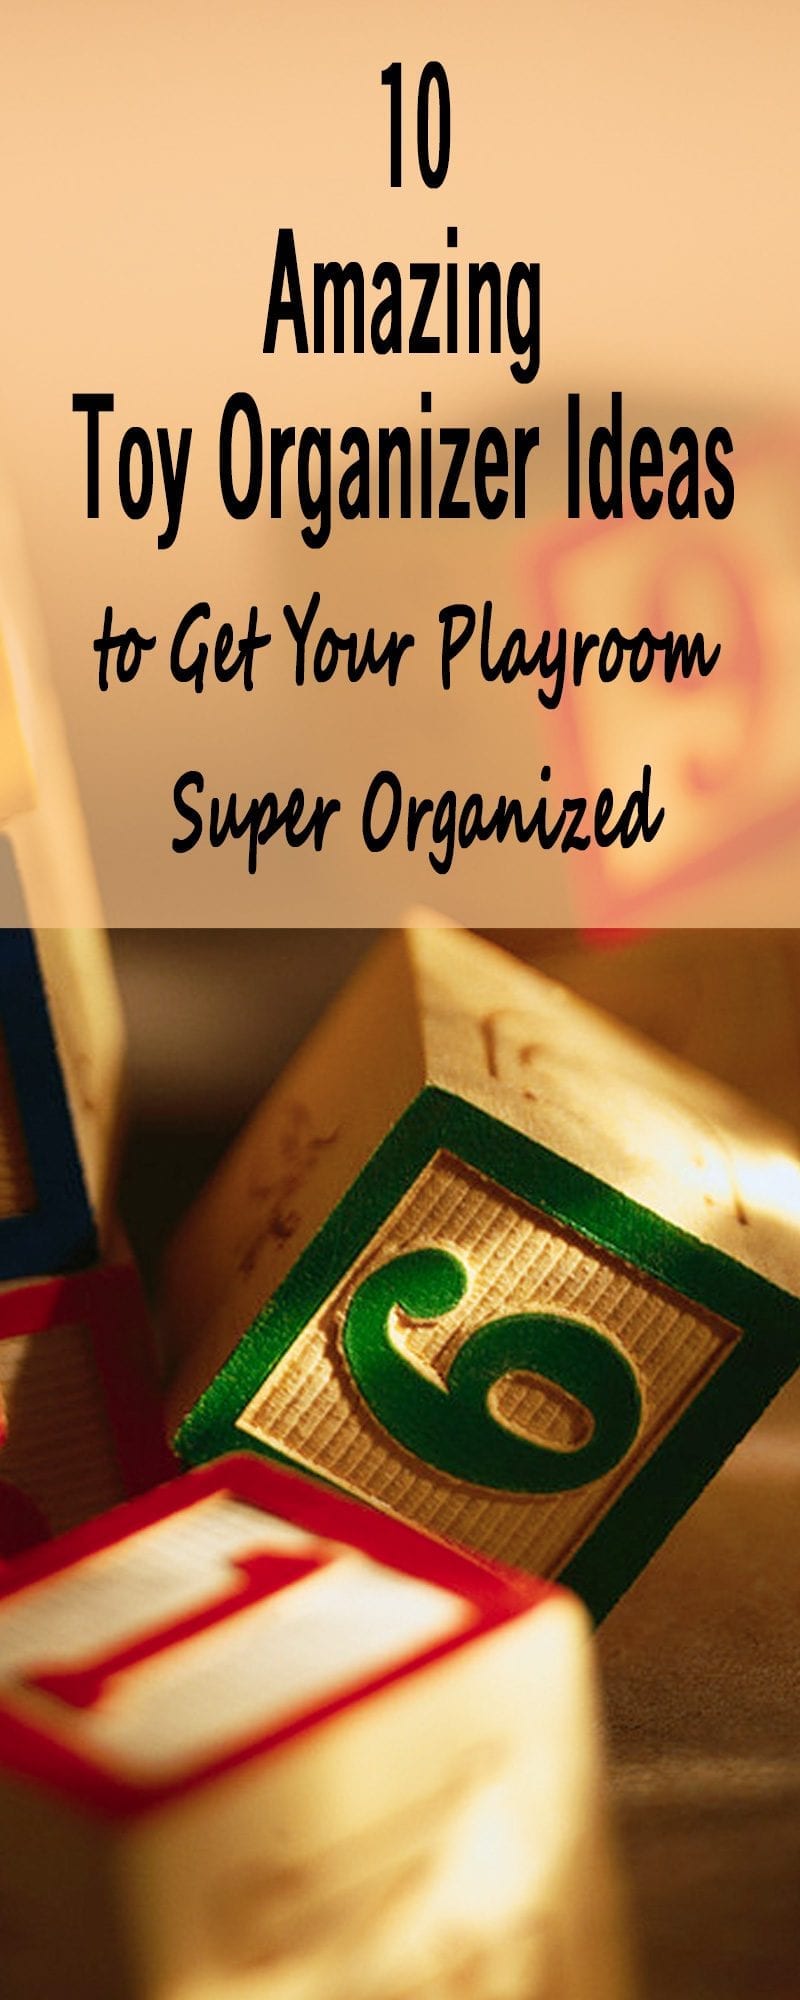 10 Amazing Toy Organizer Ideas to Get Your Playroom Super Organized